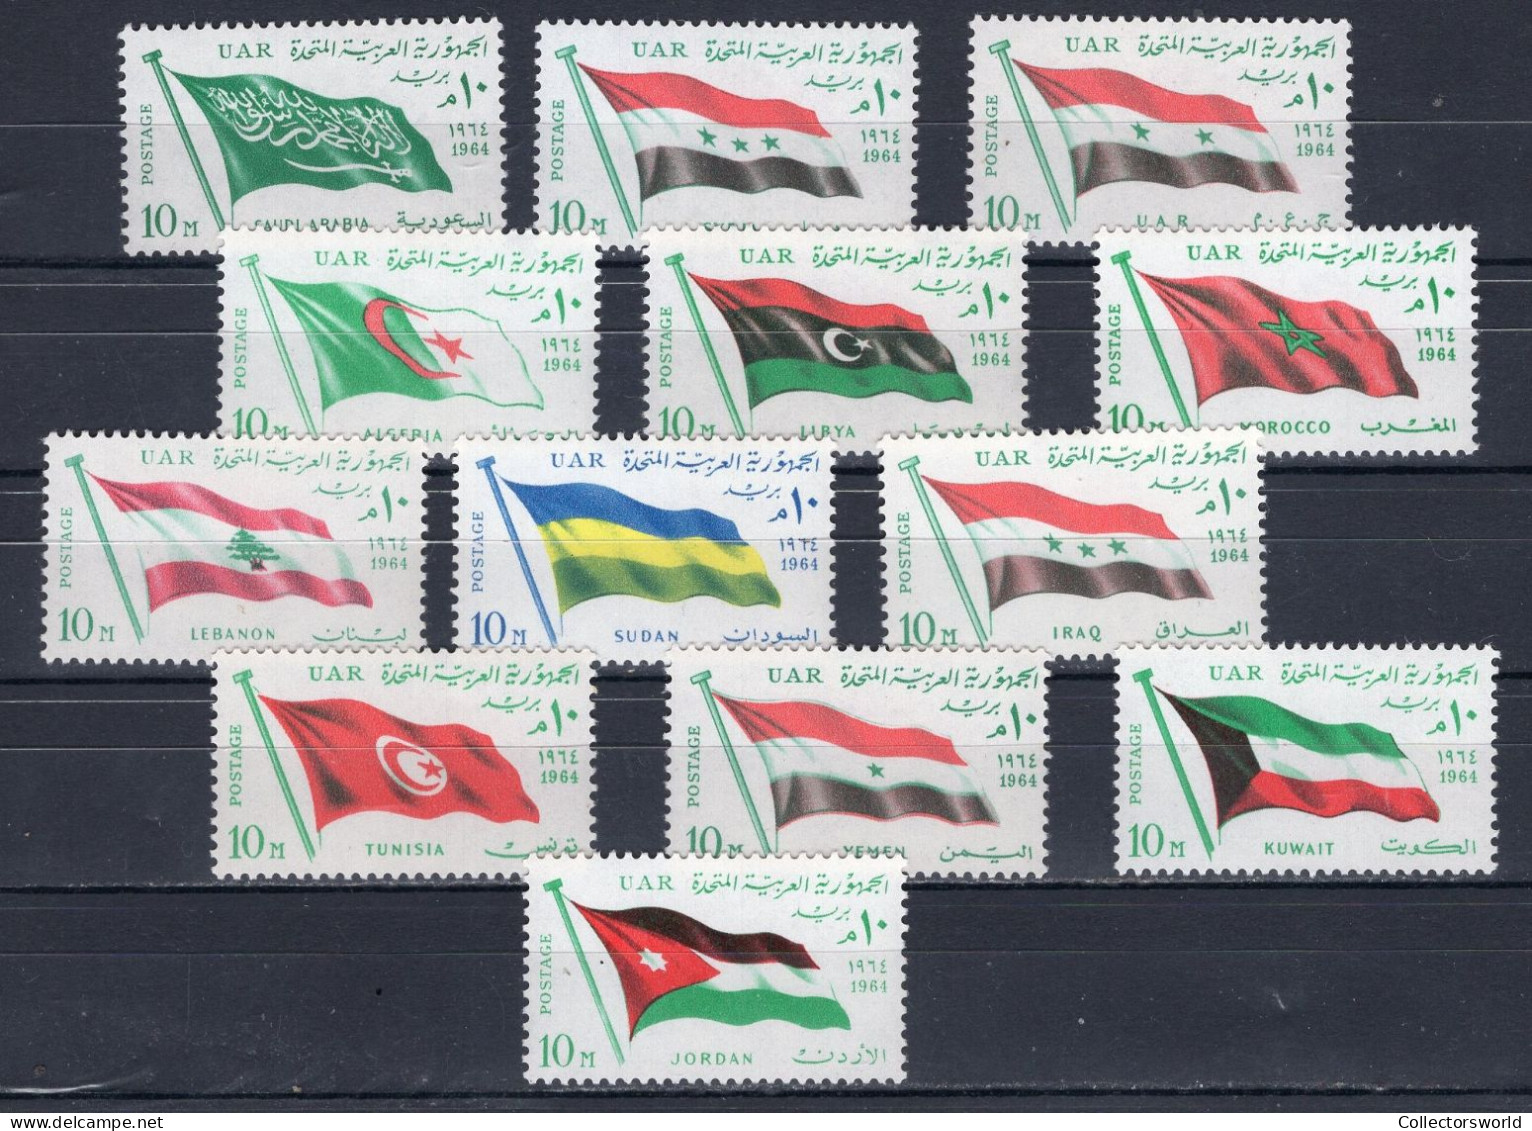 UAR United Arab Emirates Egypt 1964 Serie 13v Flags Arab League Summit MNH - Verenigde Arabische Emiraten